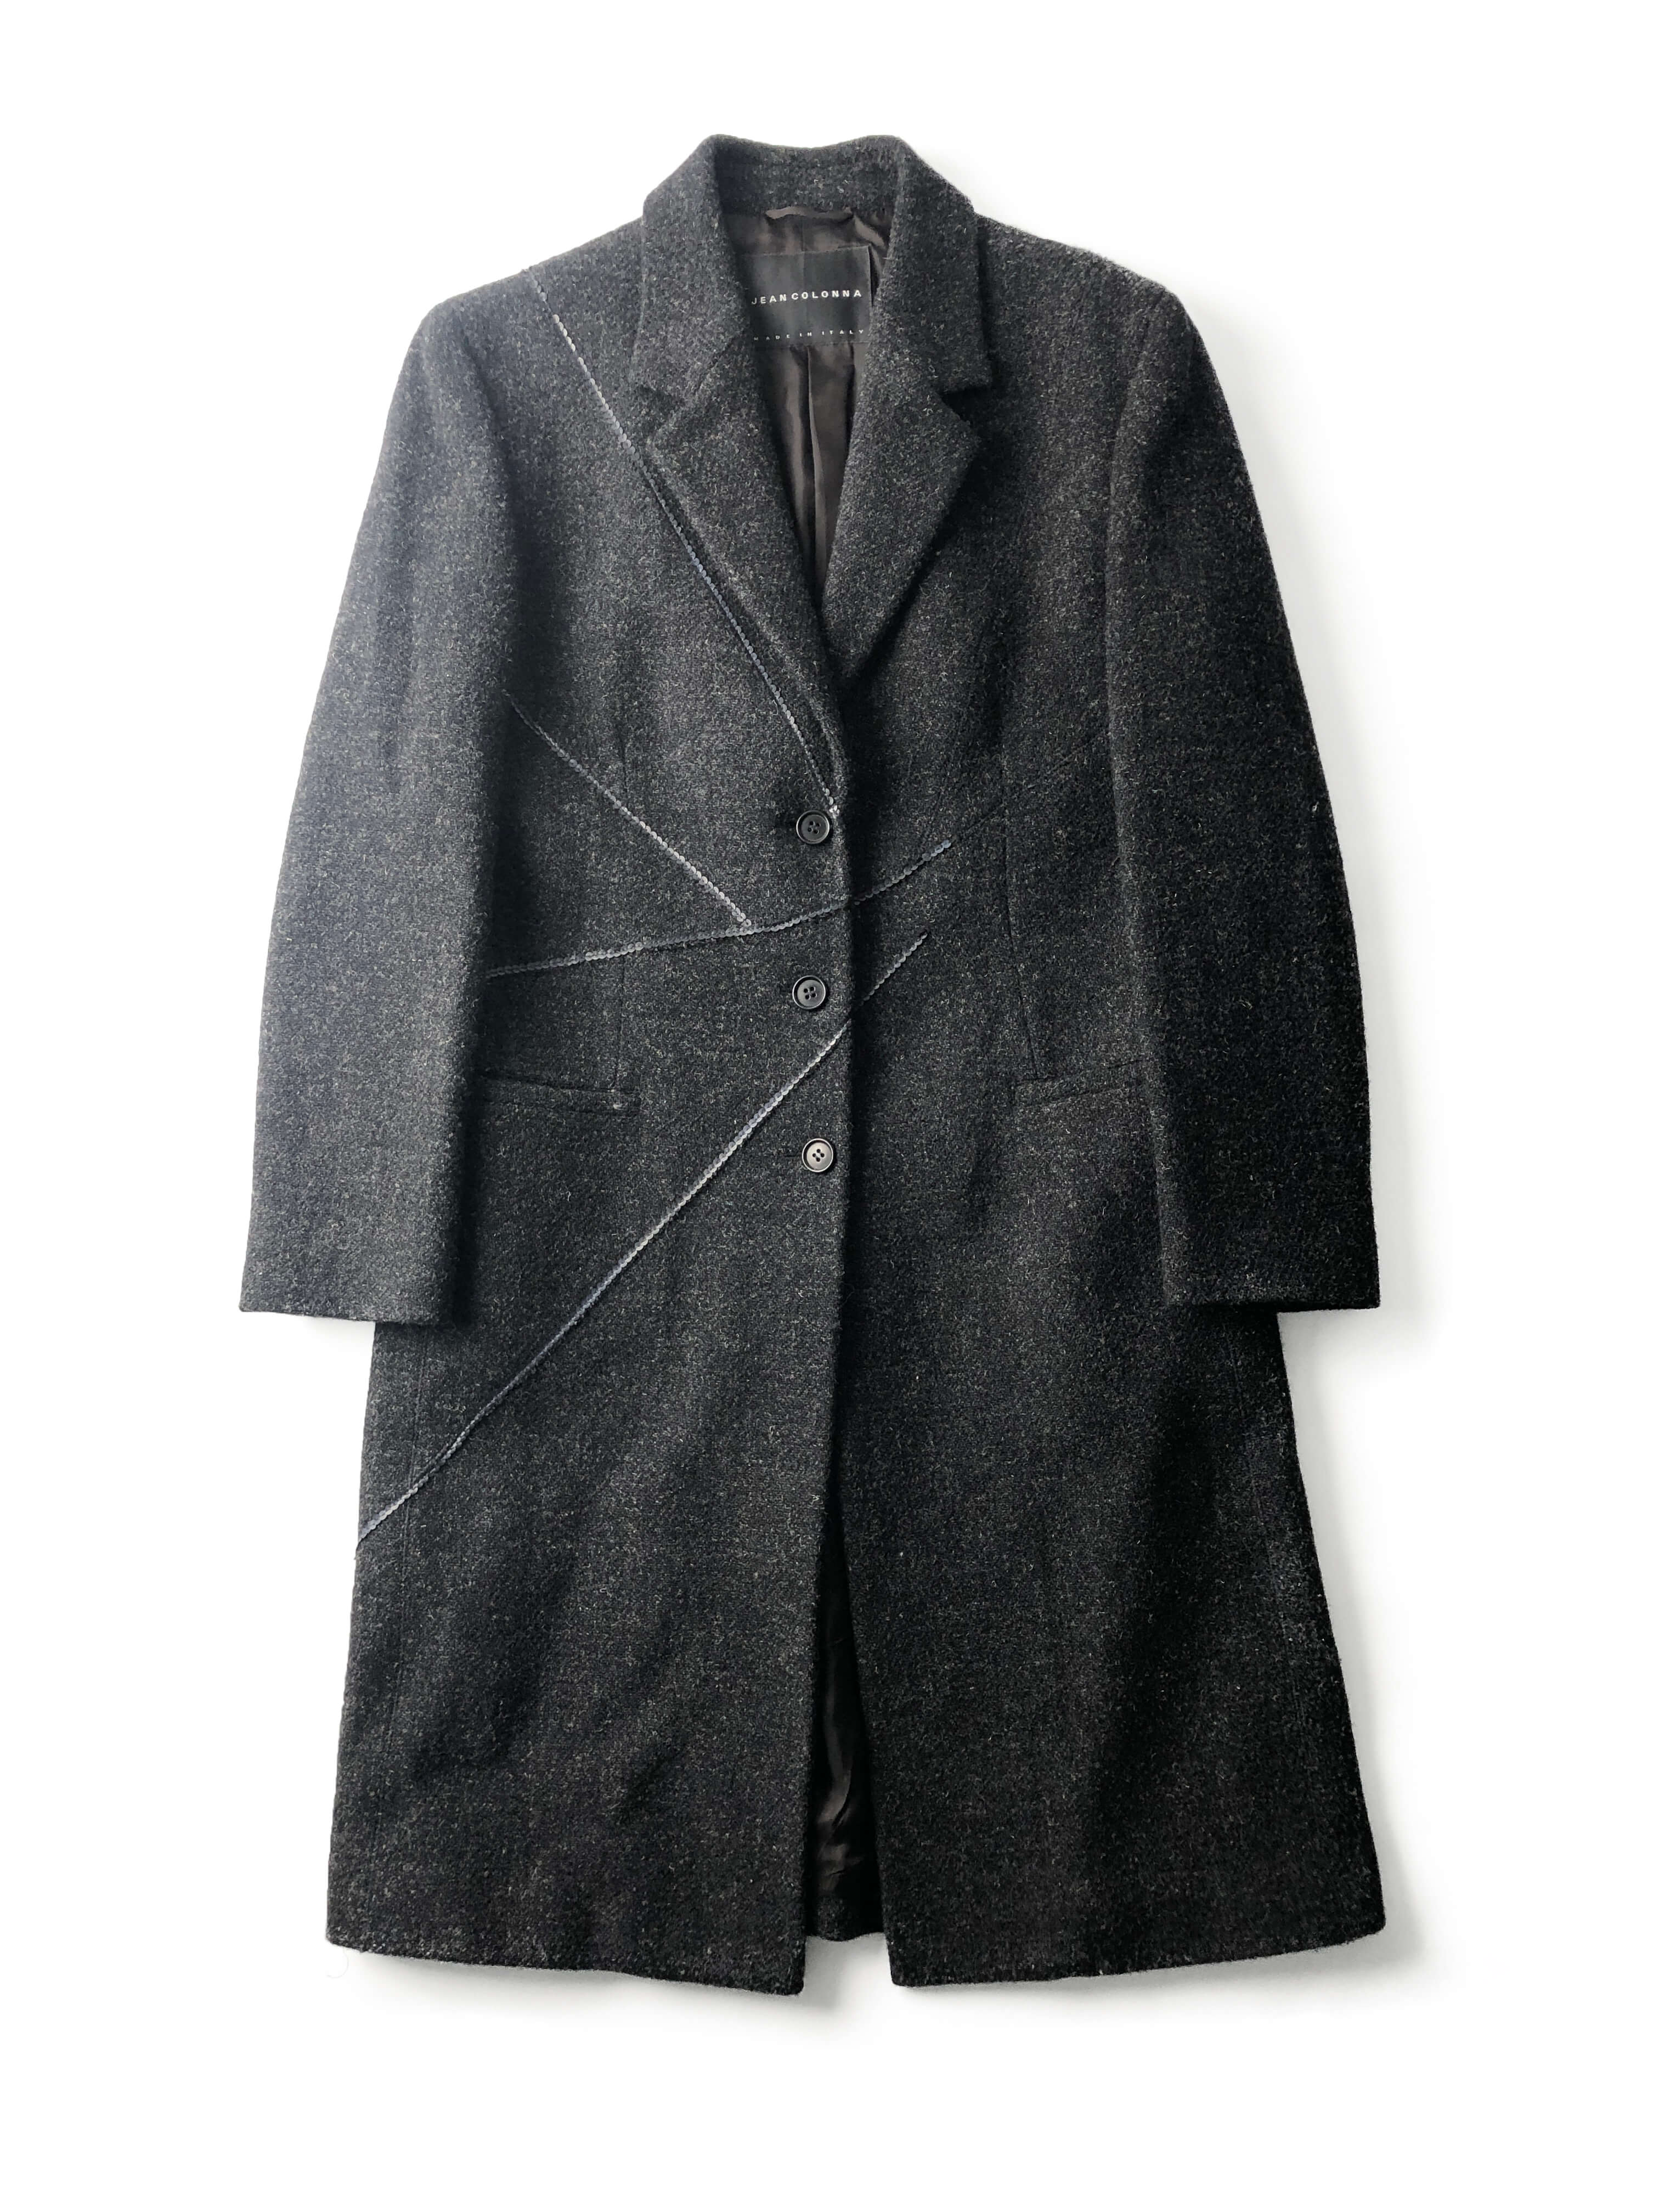 JEAN COLONNA spangle coat